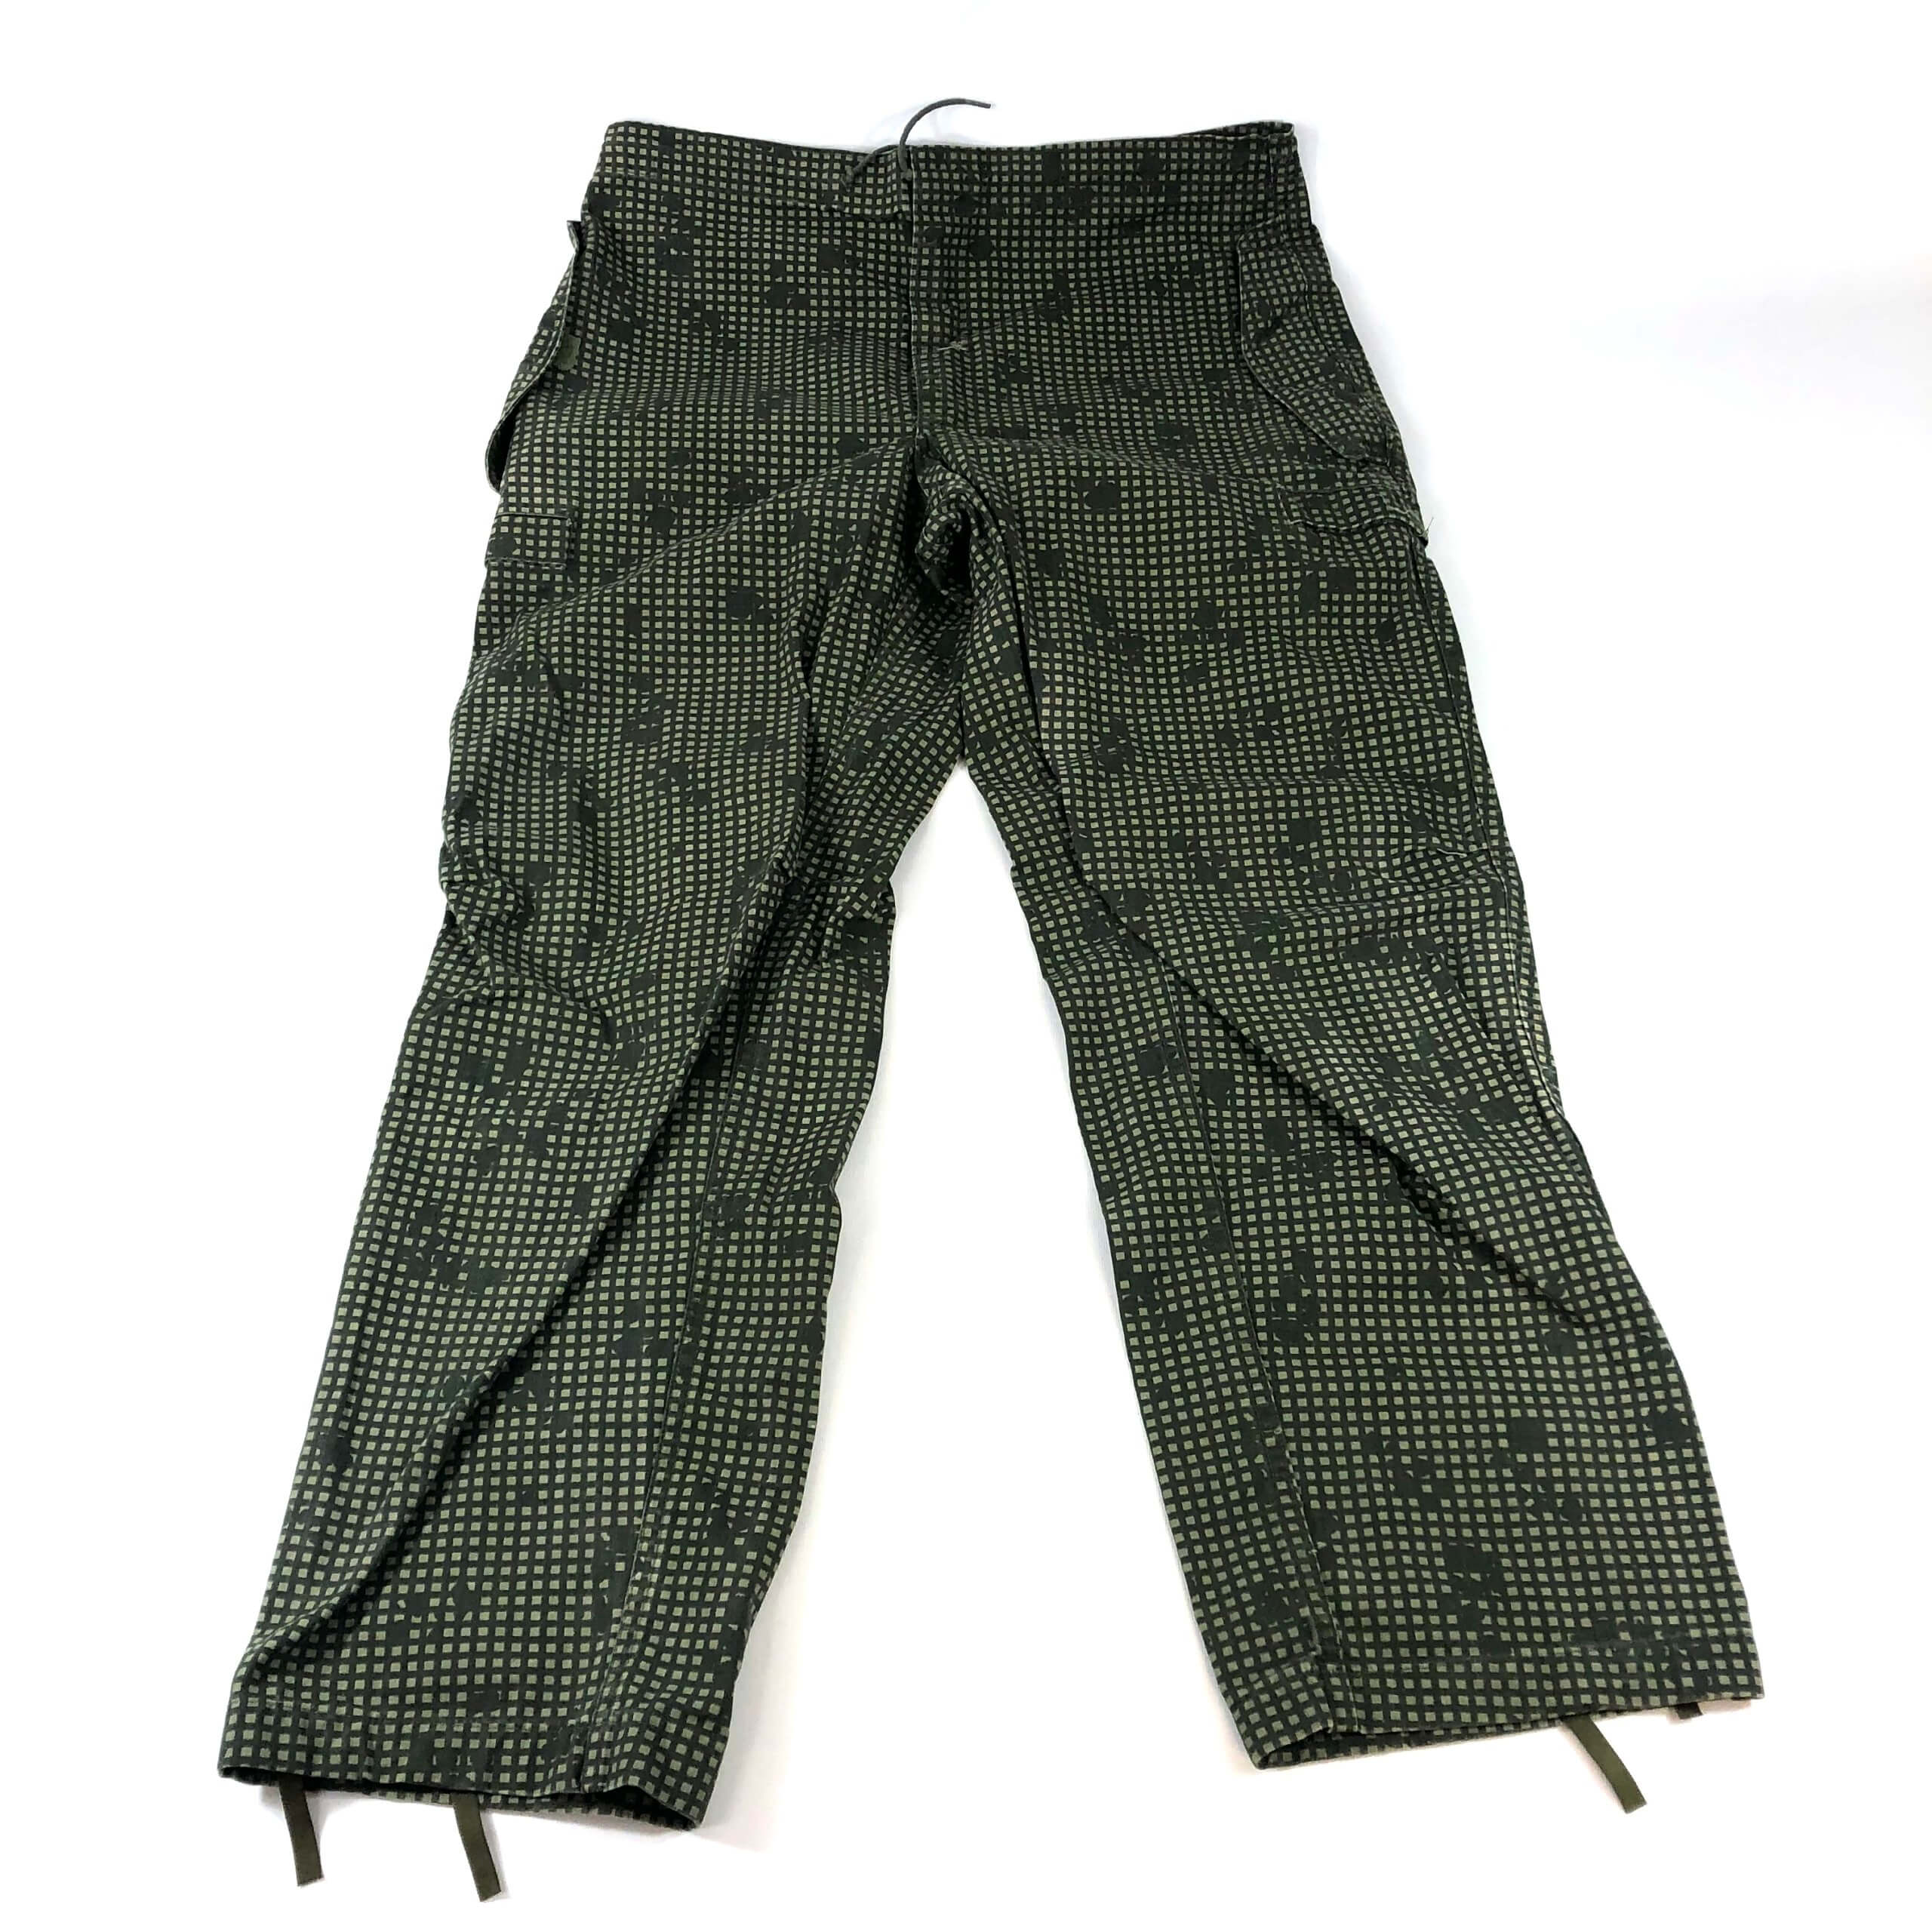 GI Night Desert Camo Pants Army Camouflage Trousers Desert Camo Used 